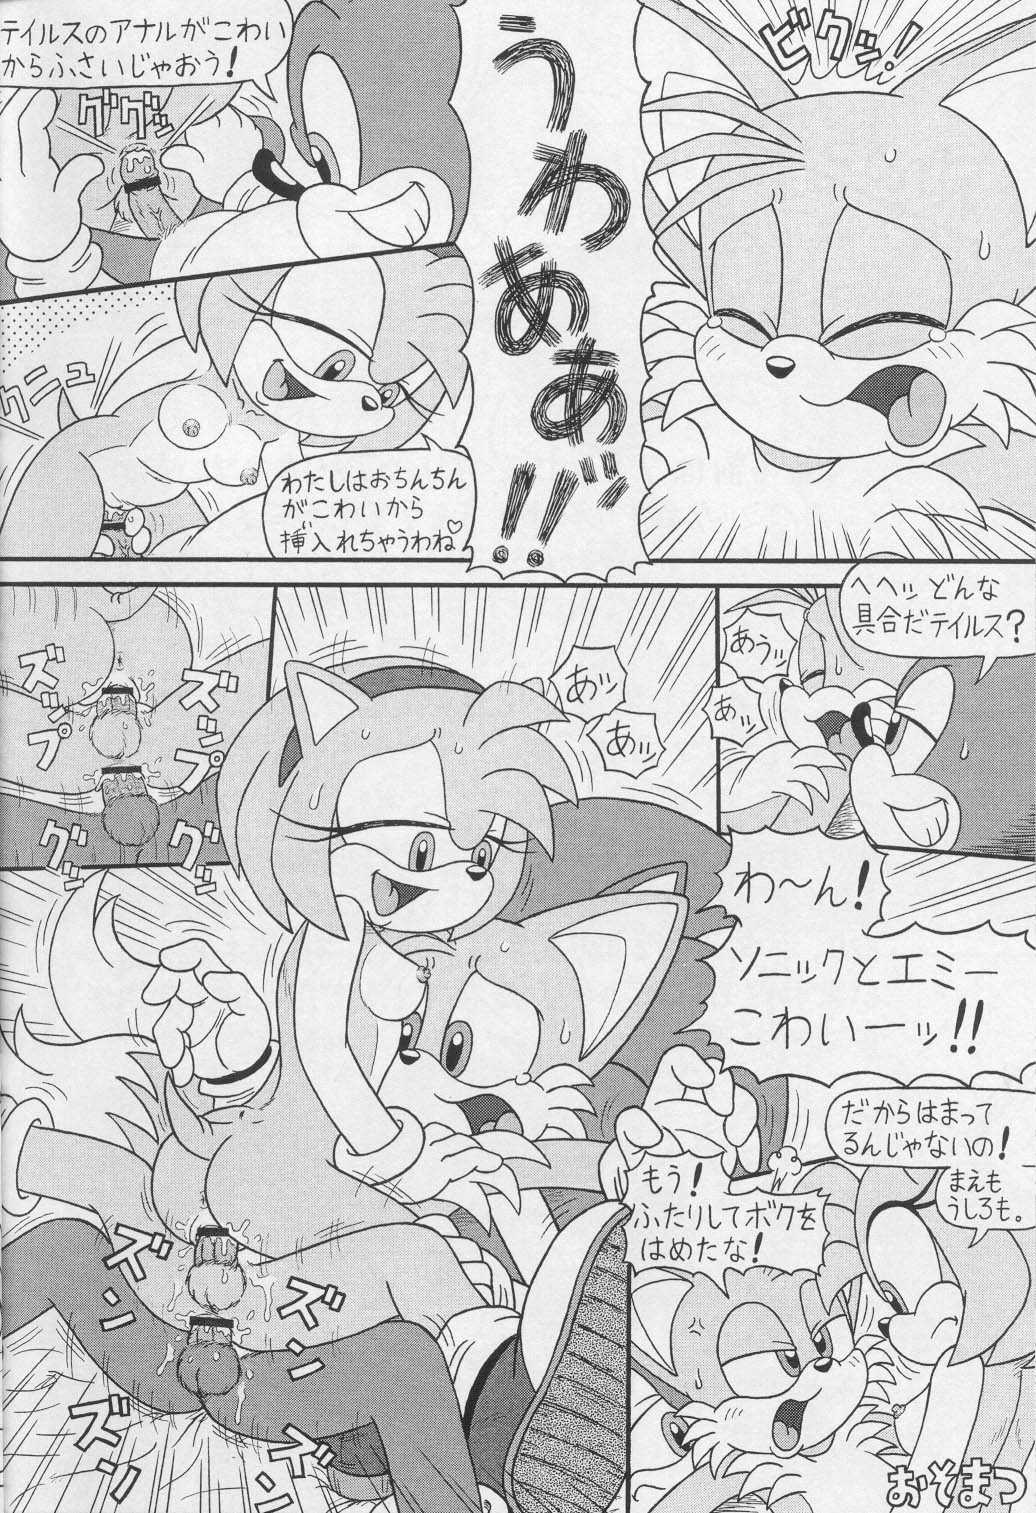 [Furry Bomb Factory] Furry Bomb #1 {Sonic} 